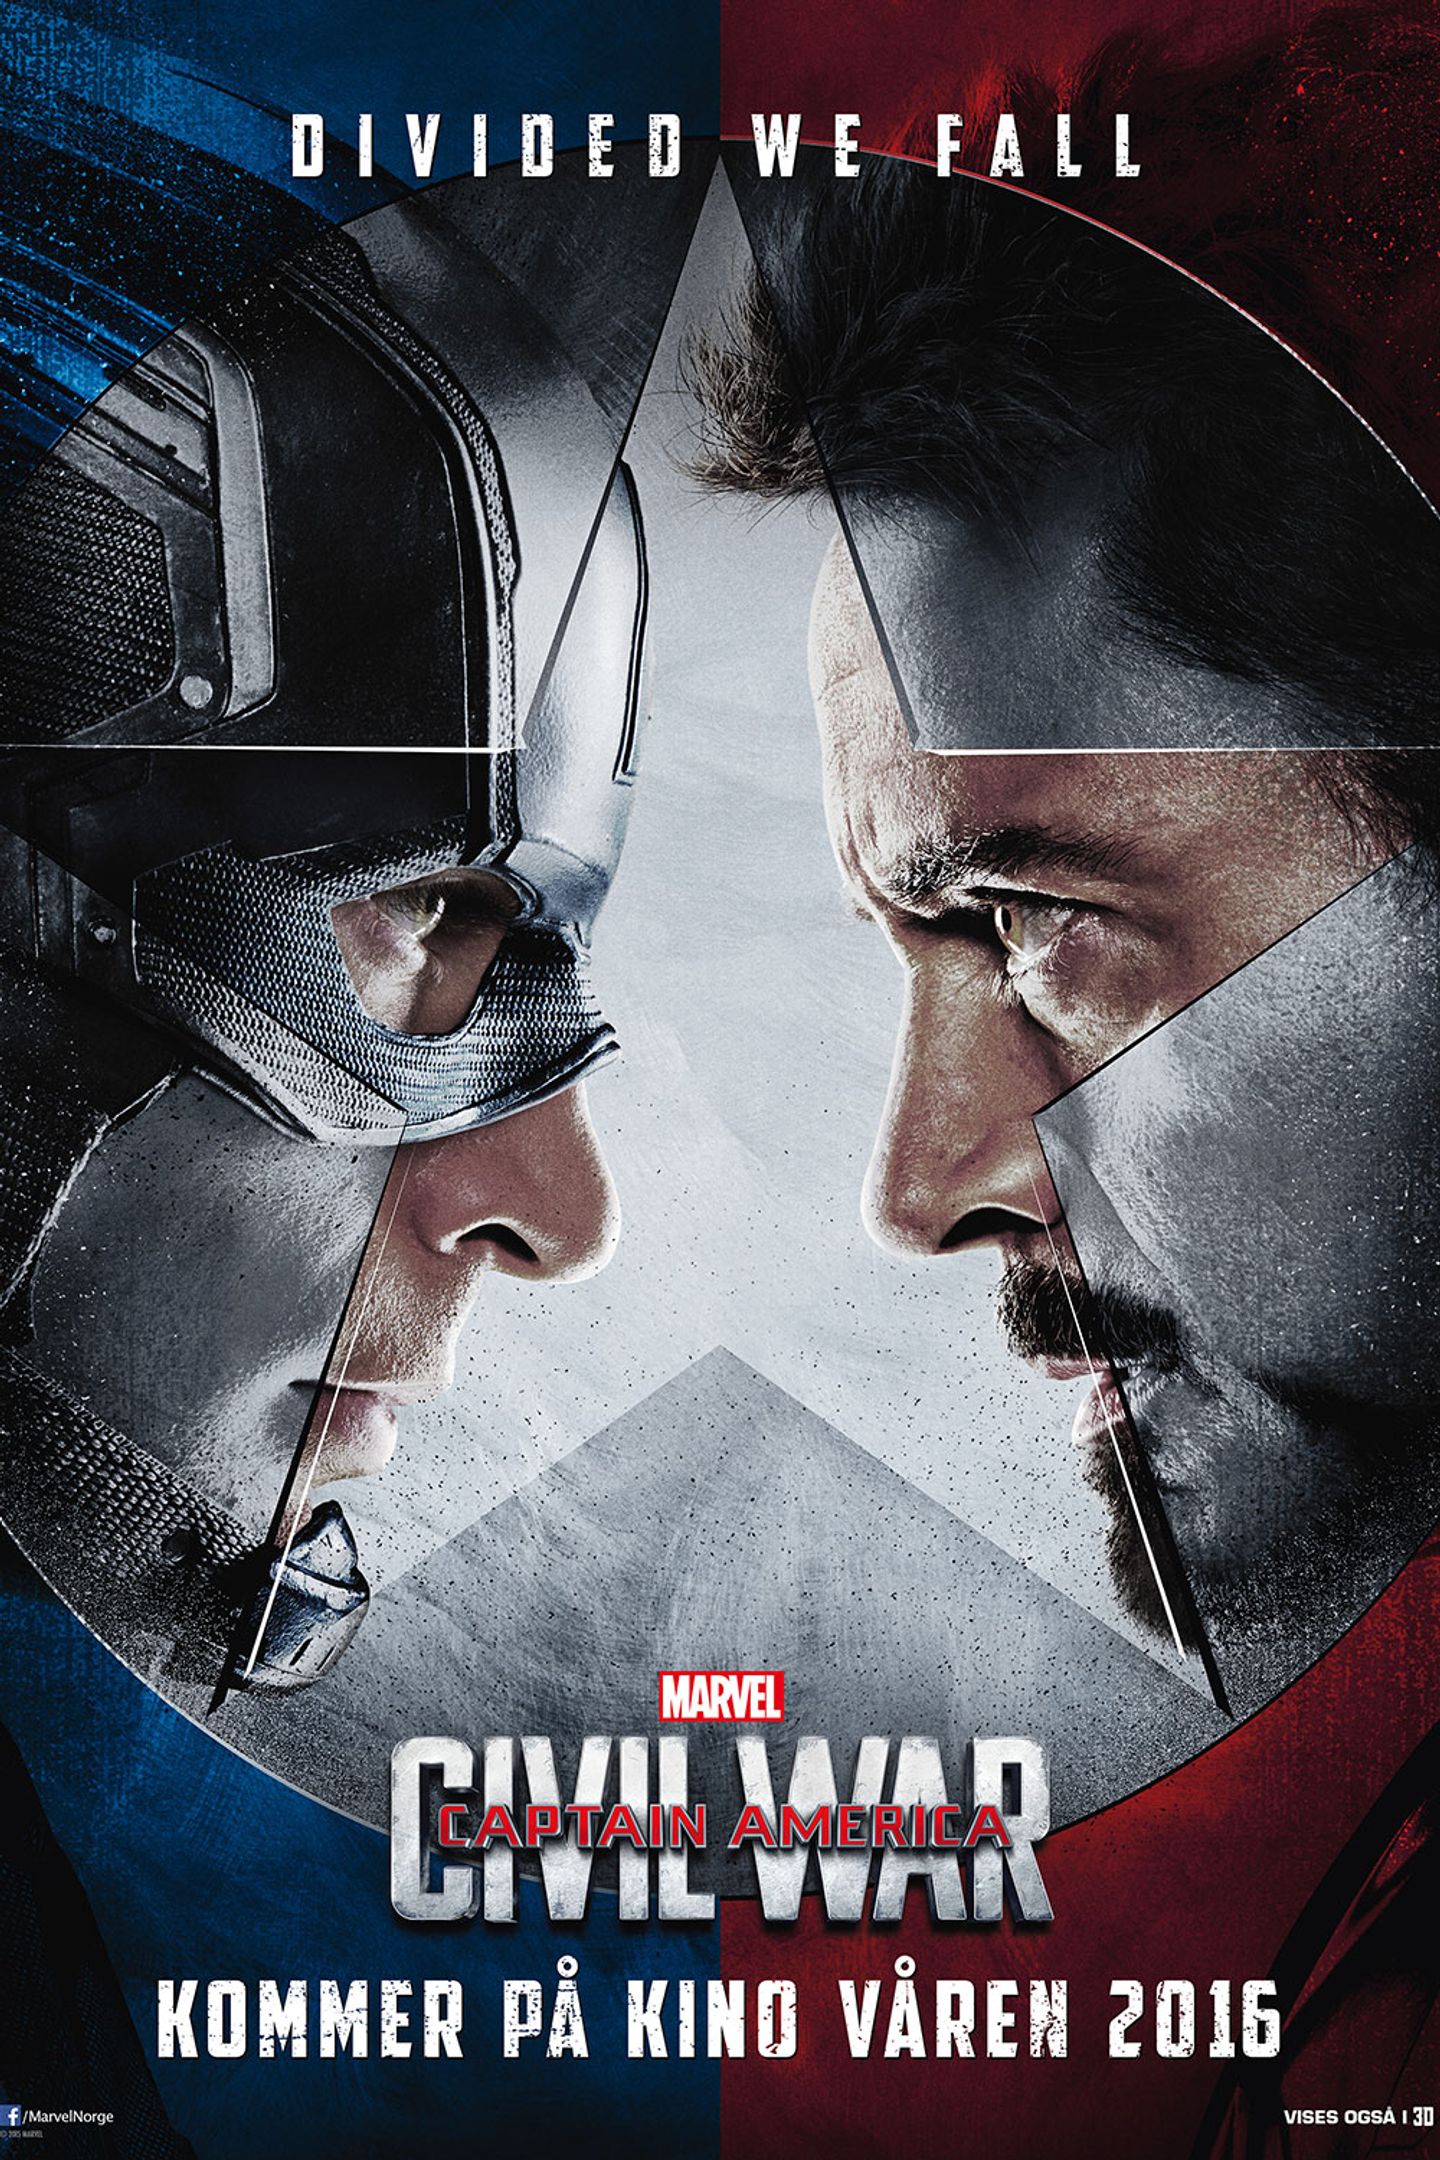 Plakat for 'Captain America: Civil War'